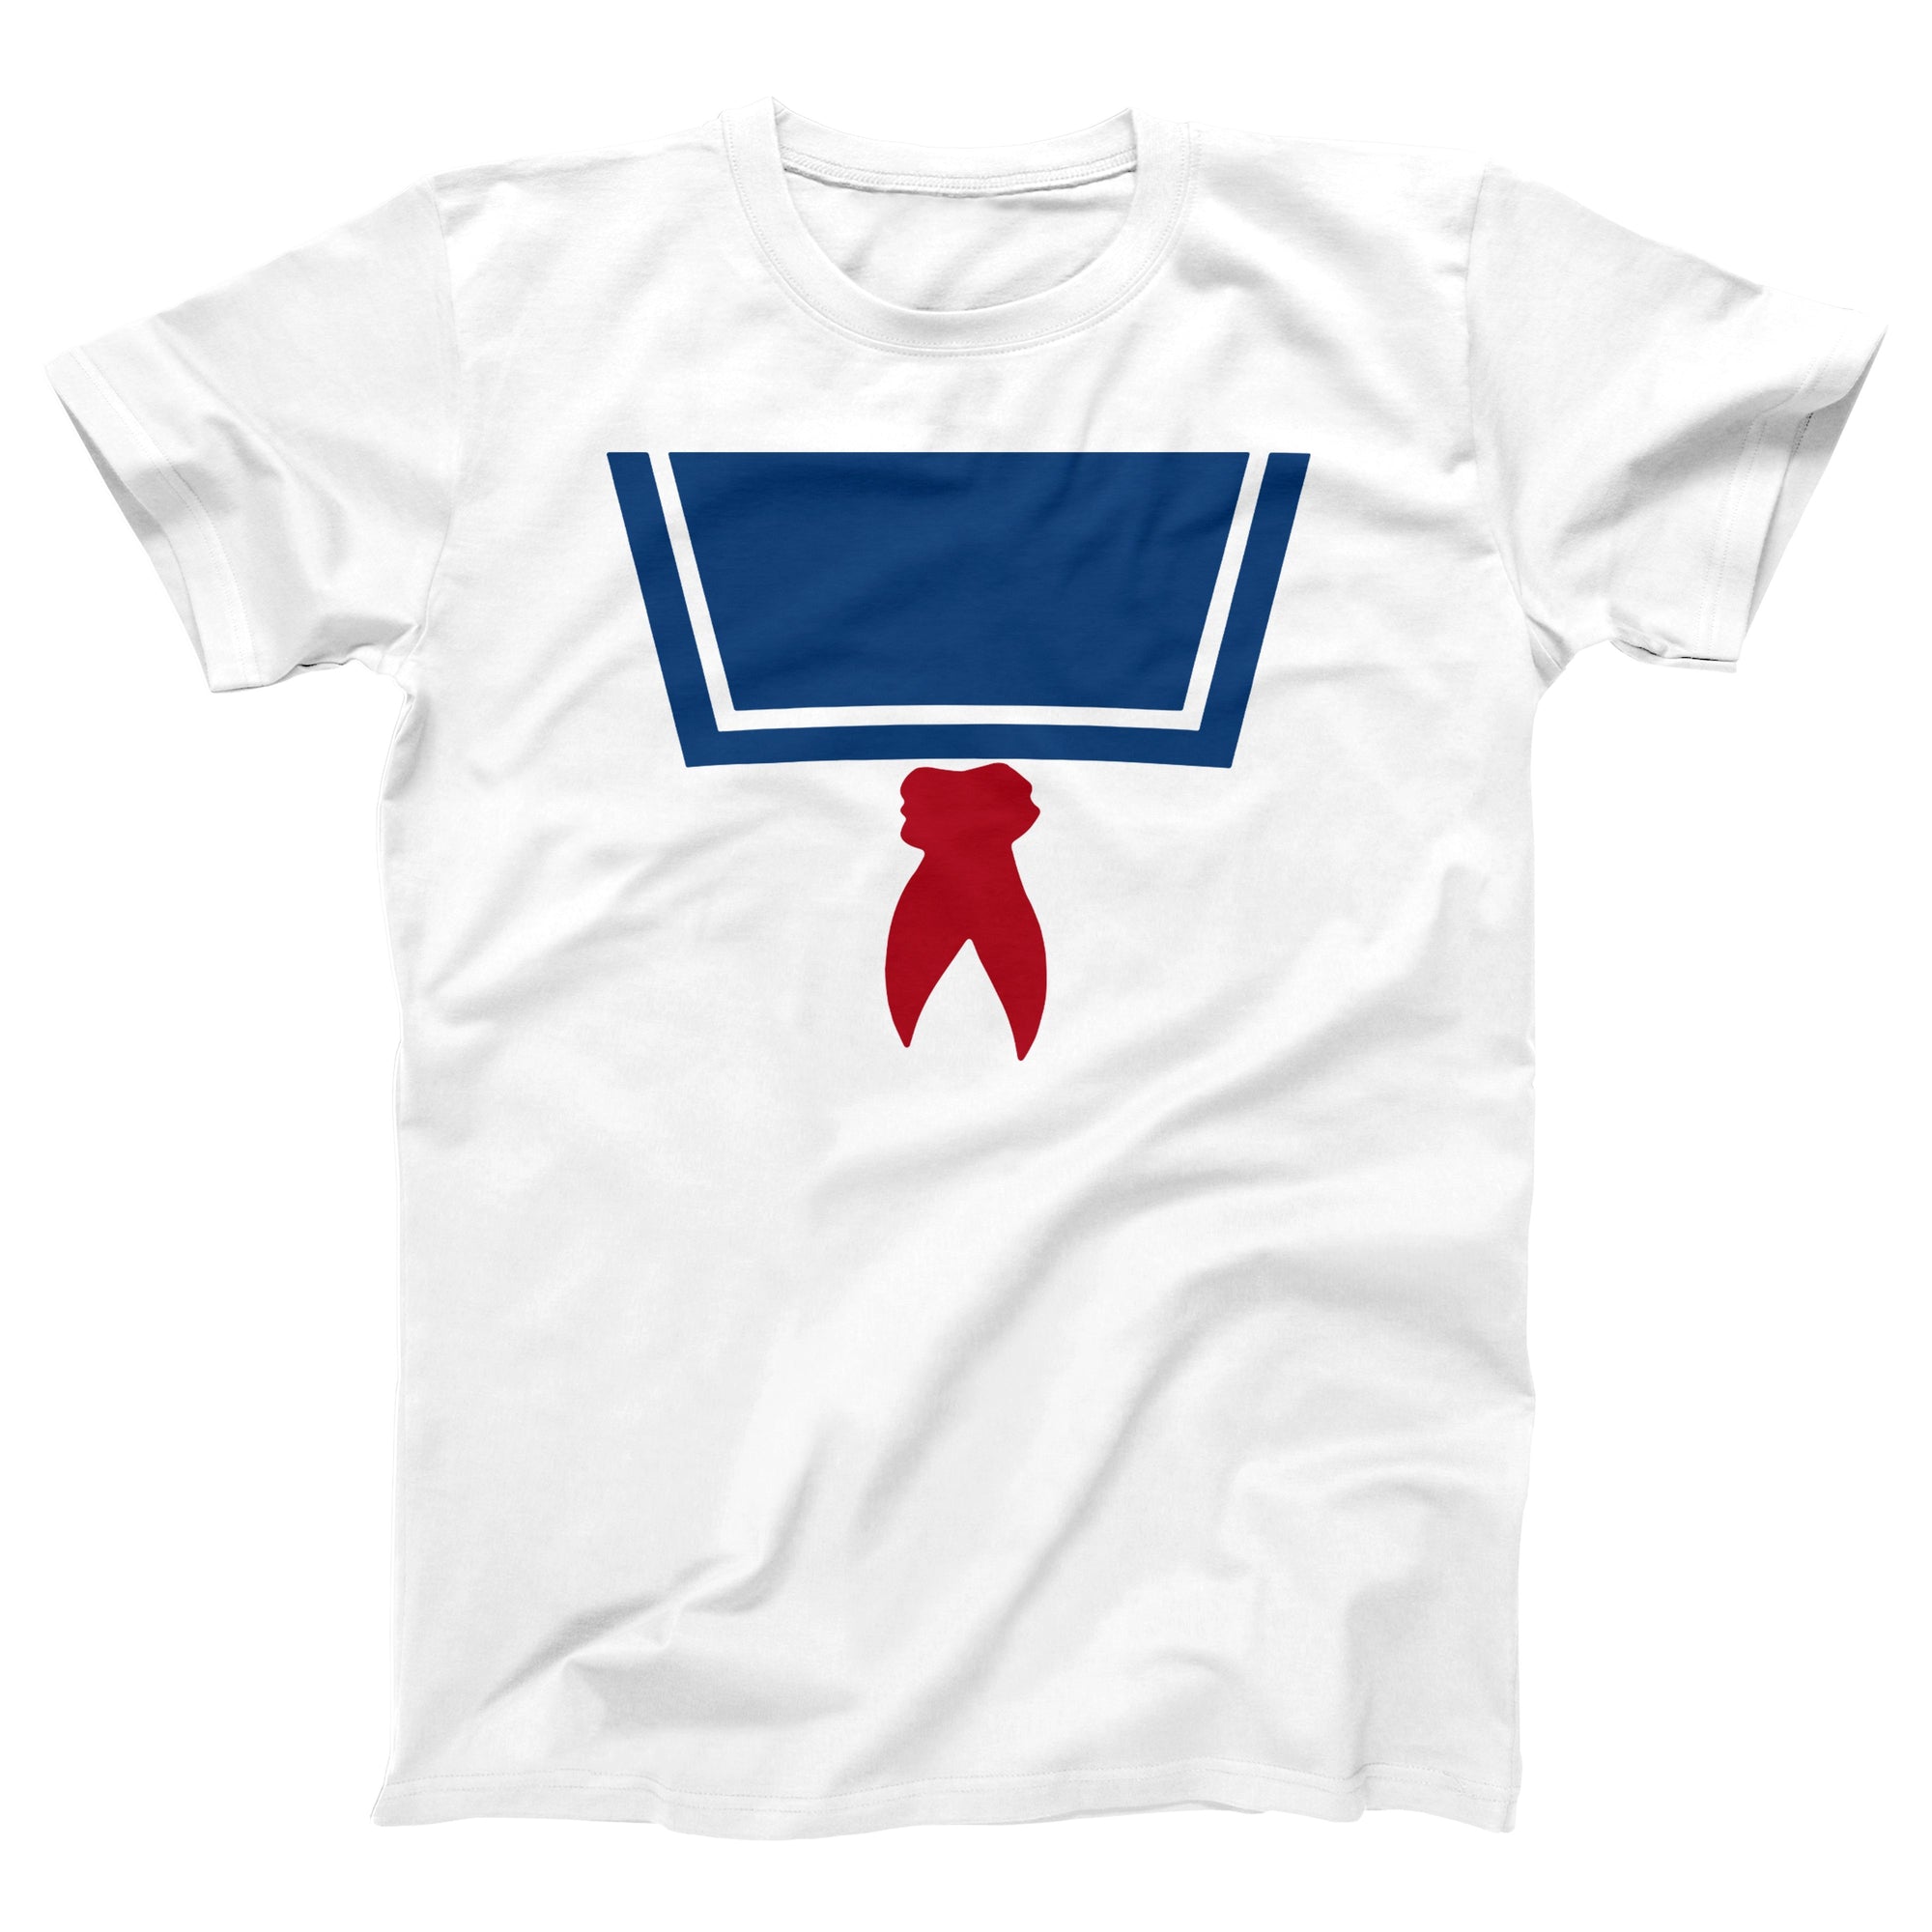 Stay Puft Marshmallow Man Adult Unisex T-Shirt